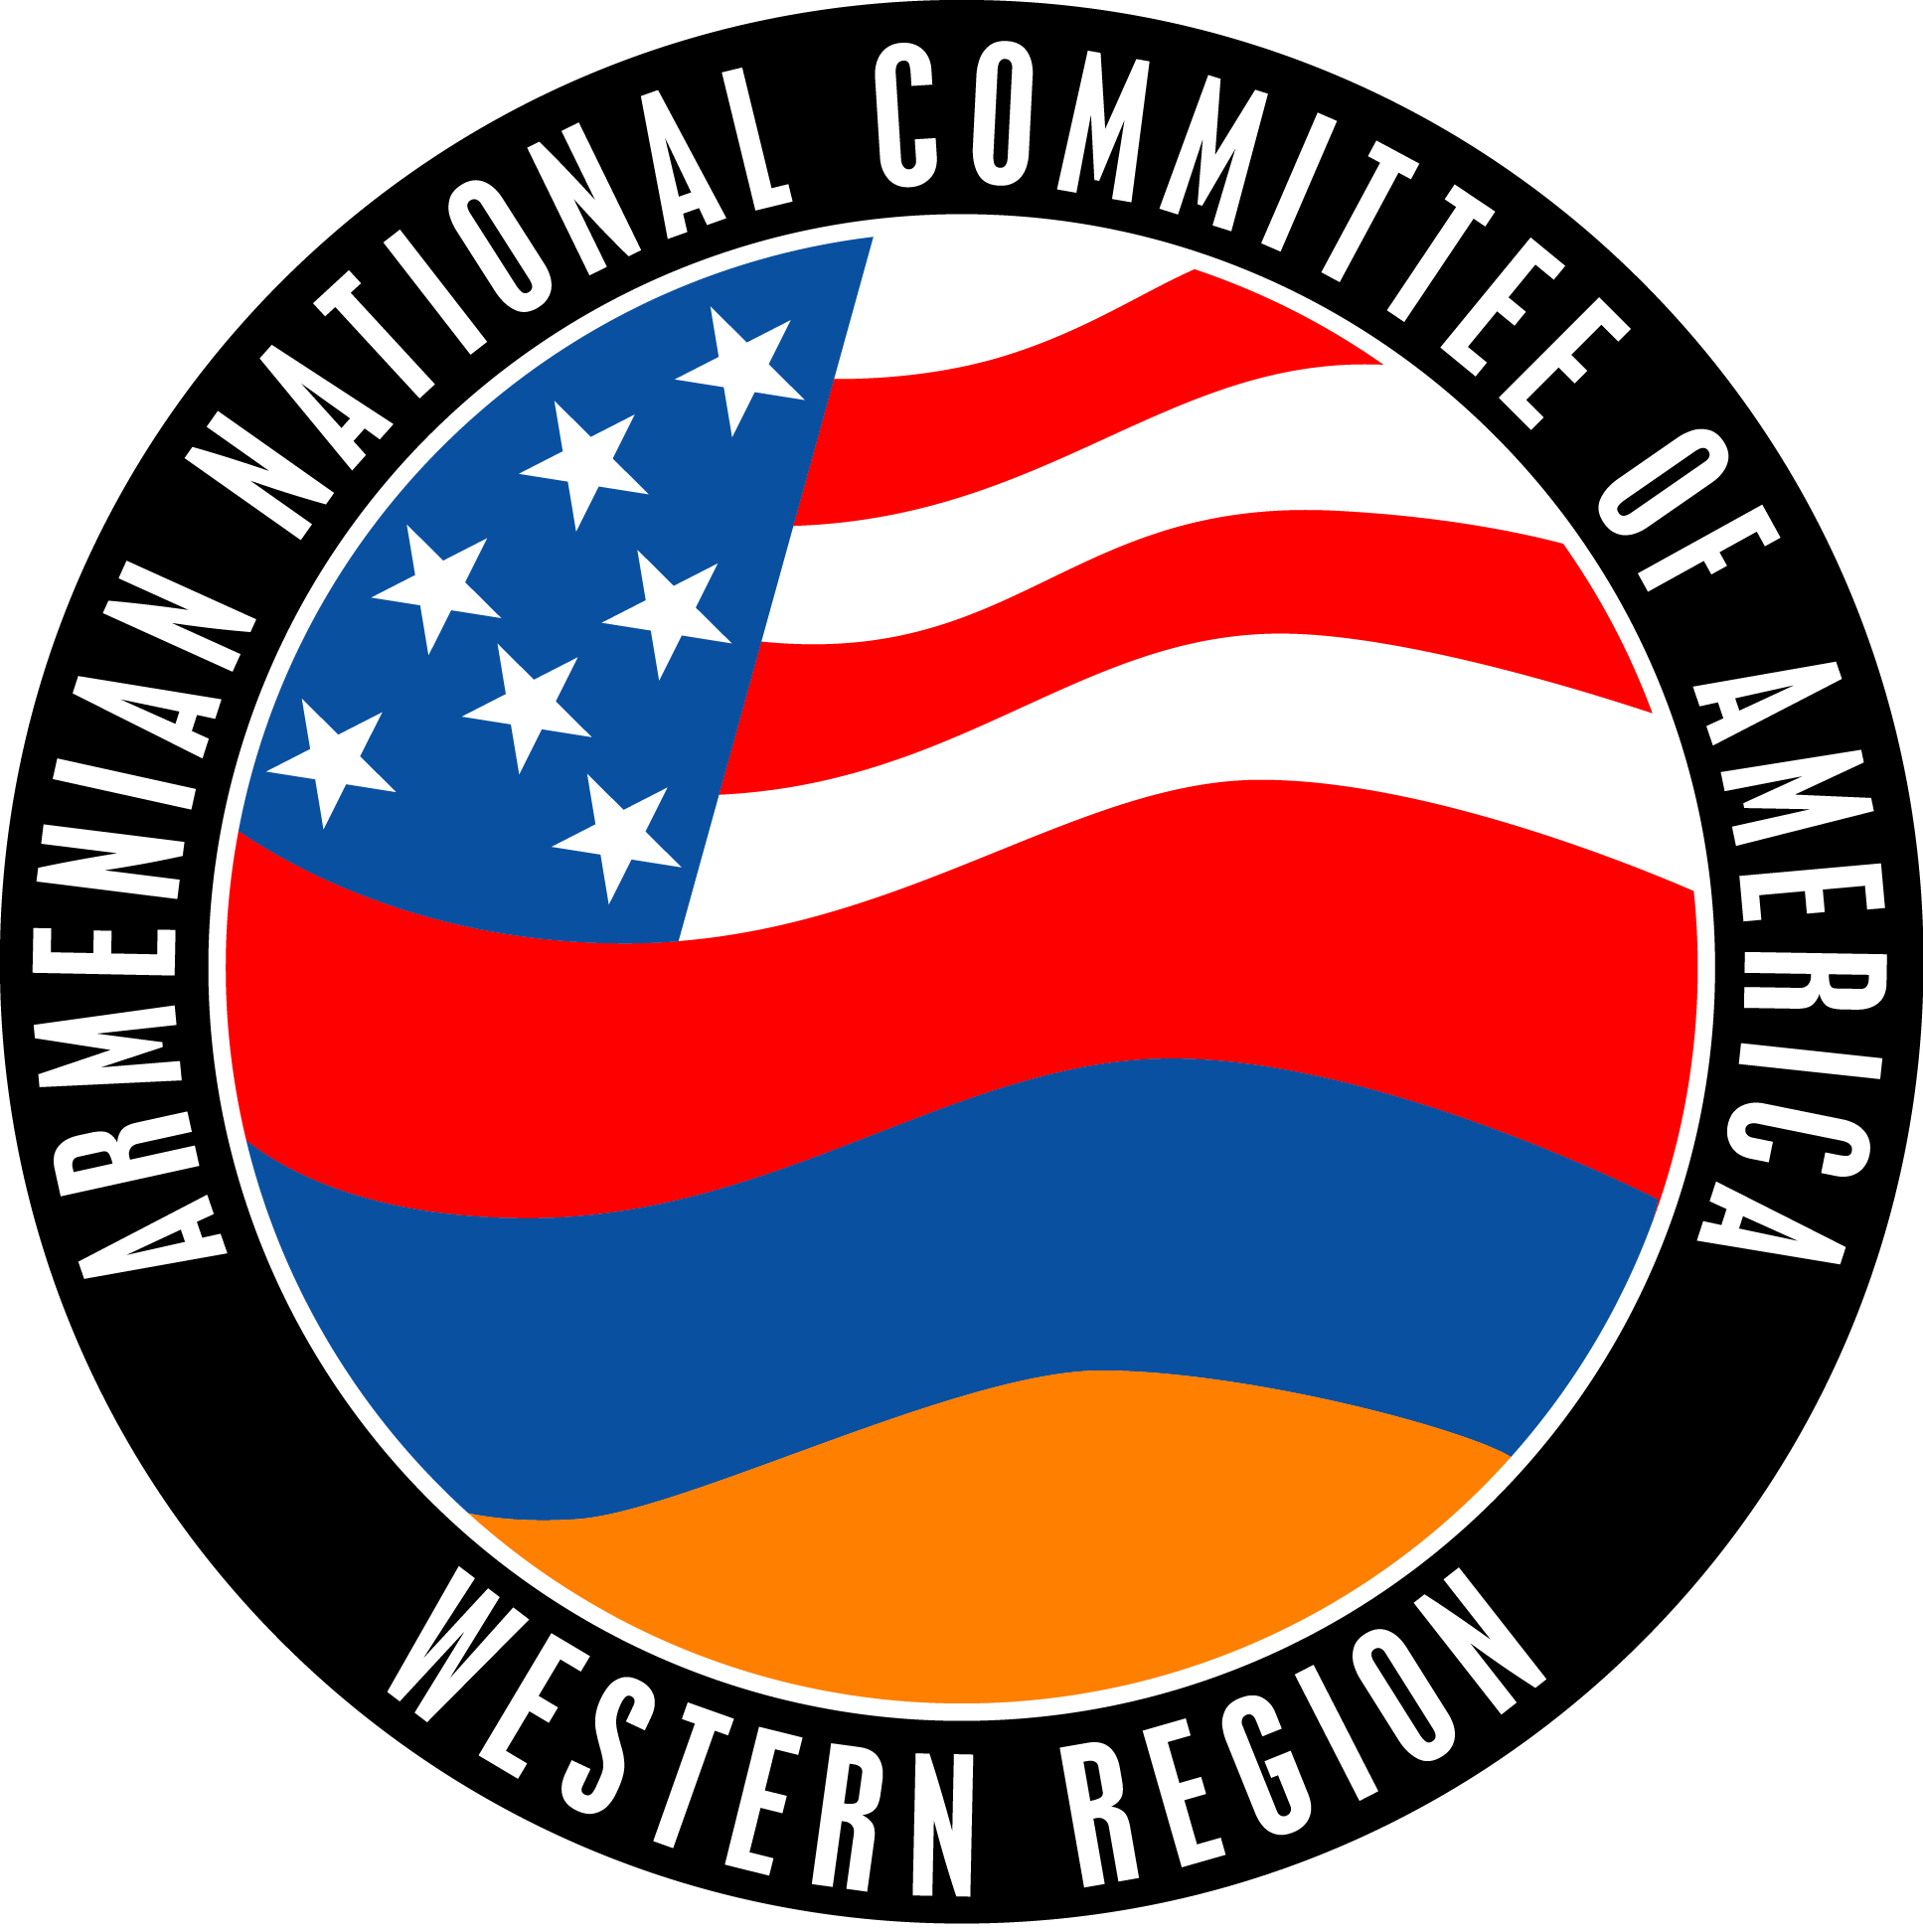 ANCA-Western Region Congratulates the Armenian People on Peaceful Victory